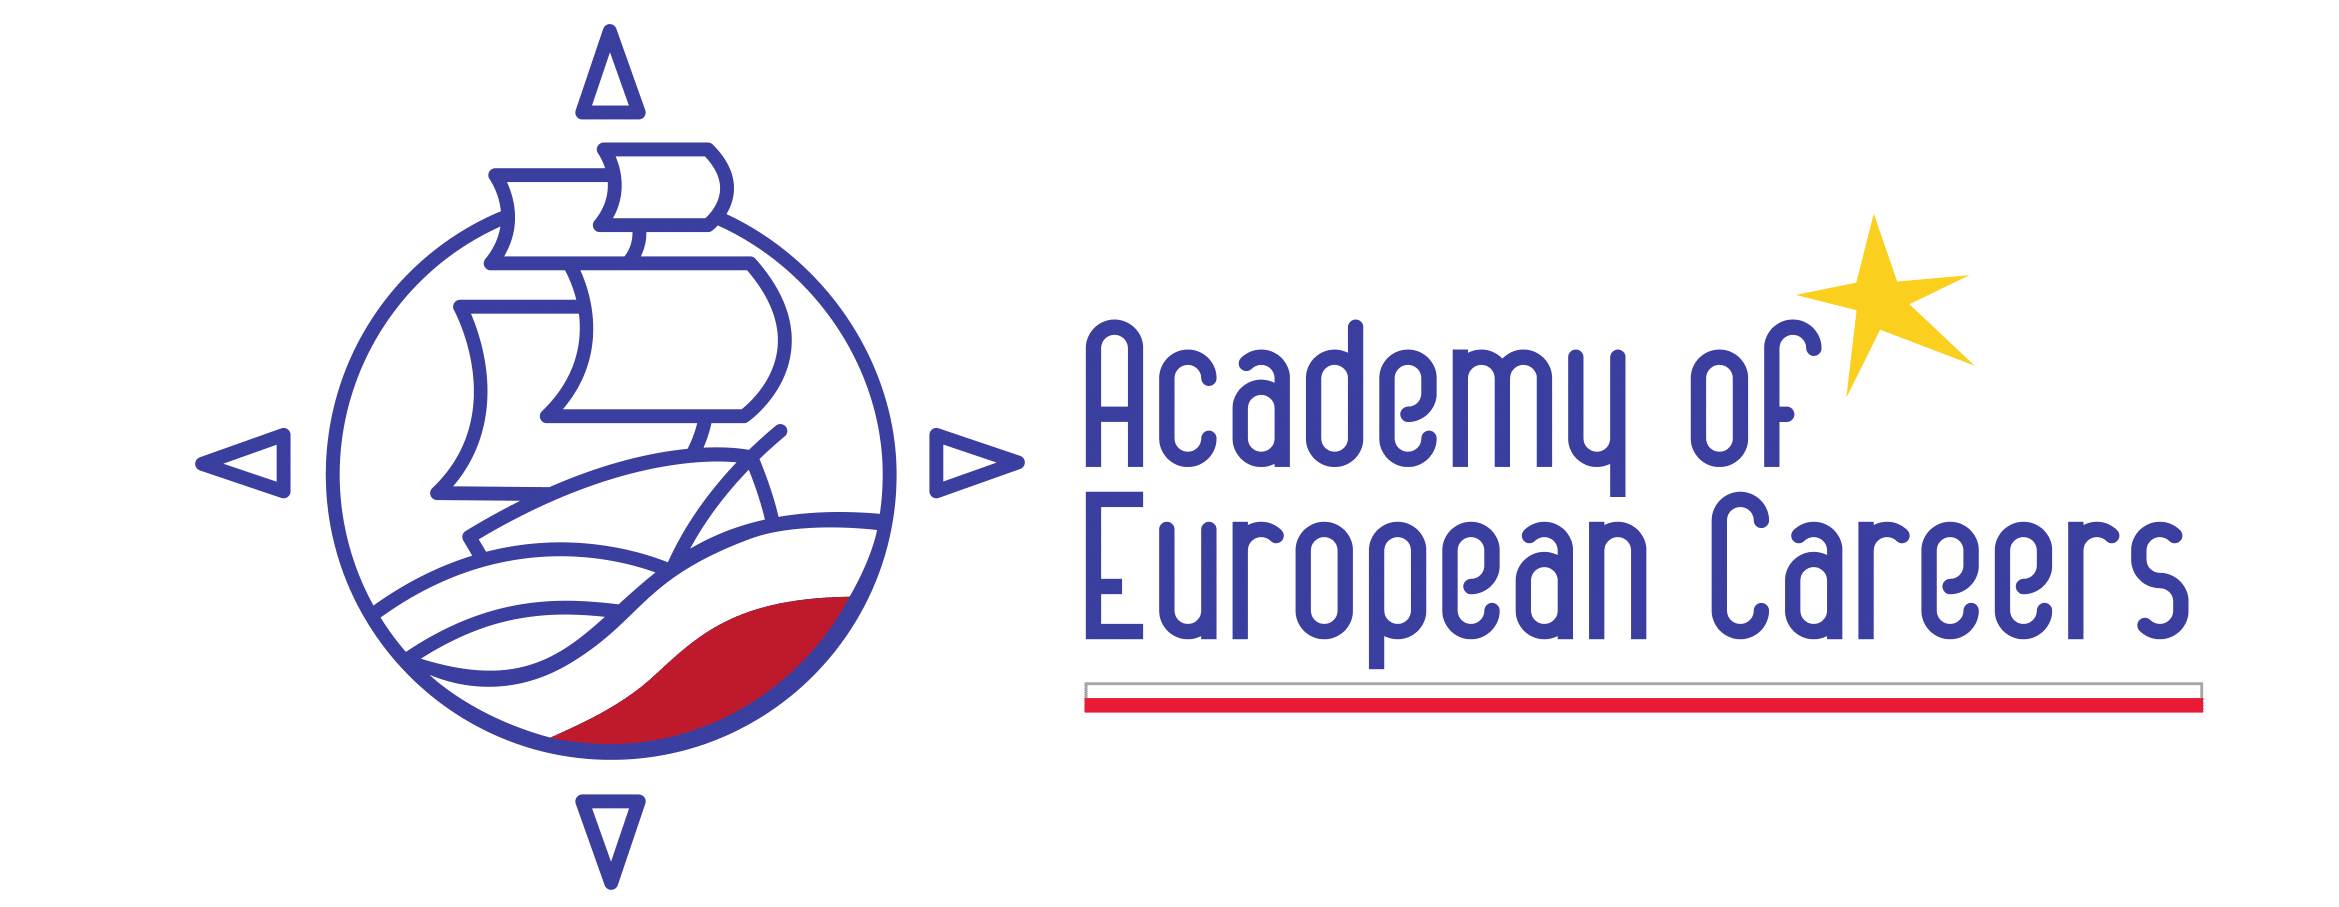 The Academy of European Careers 